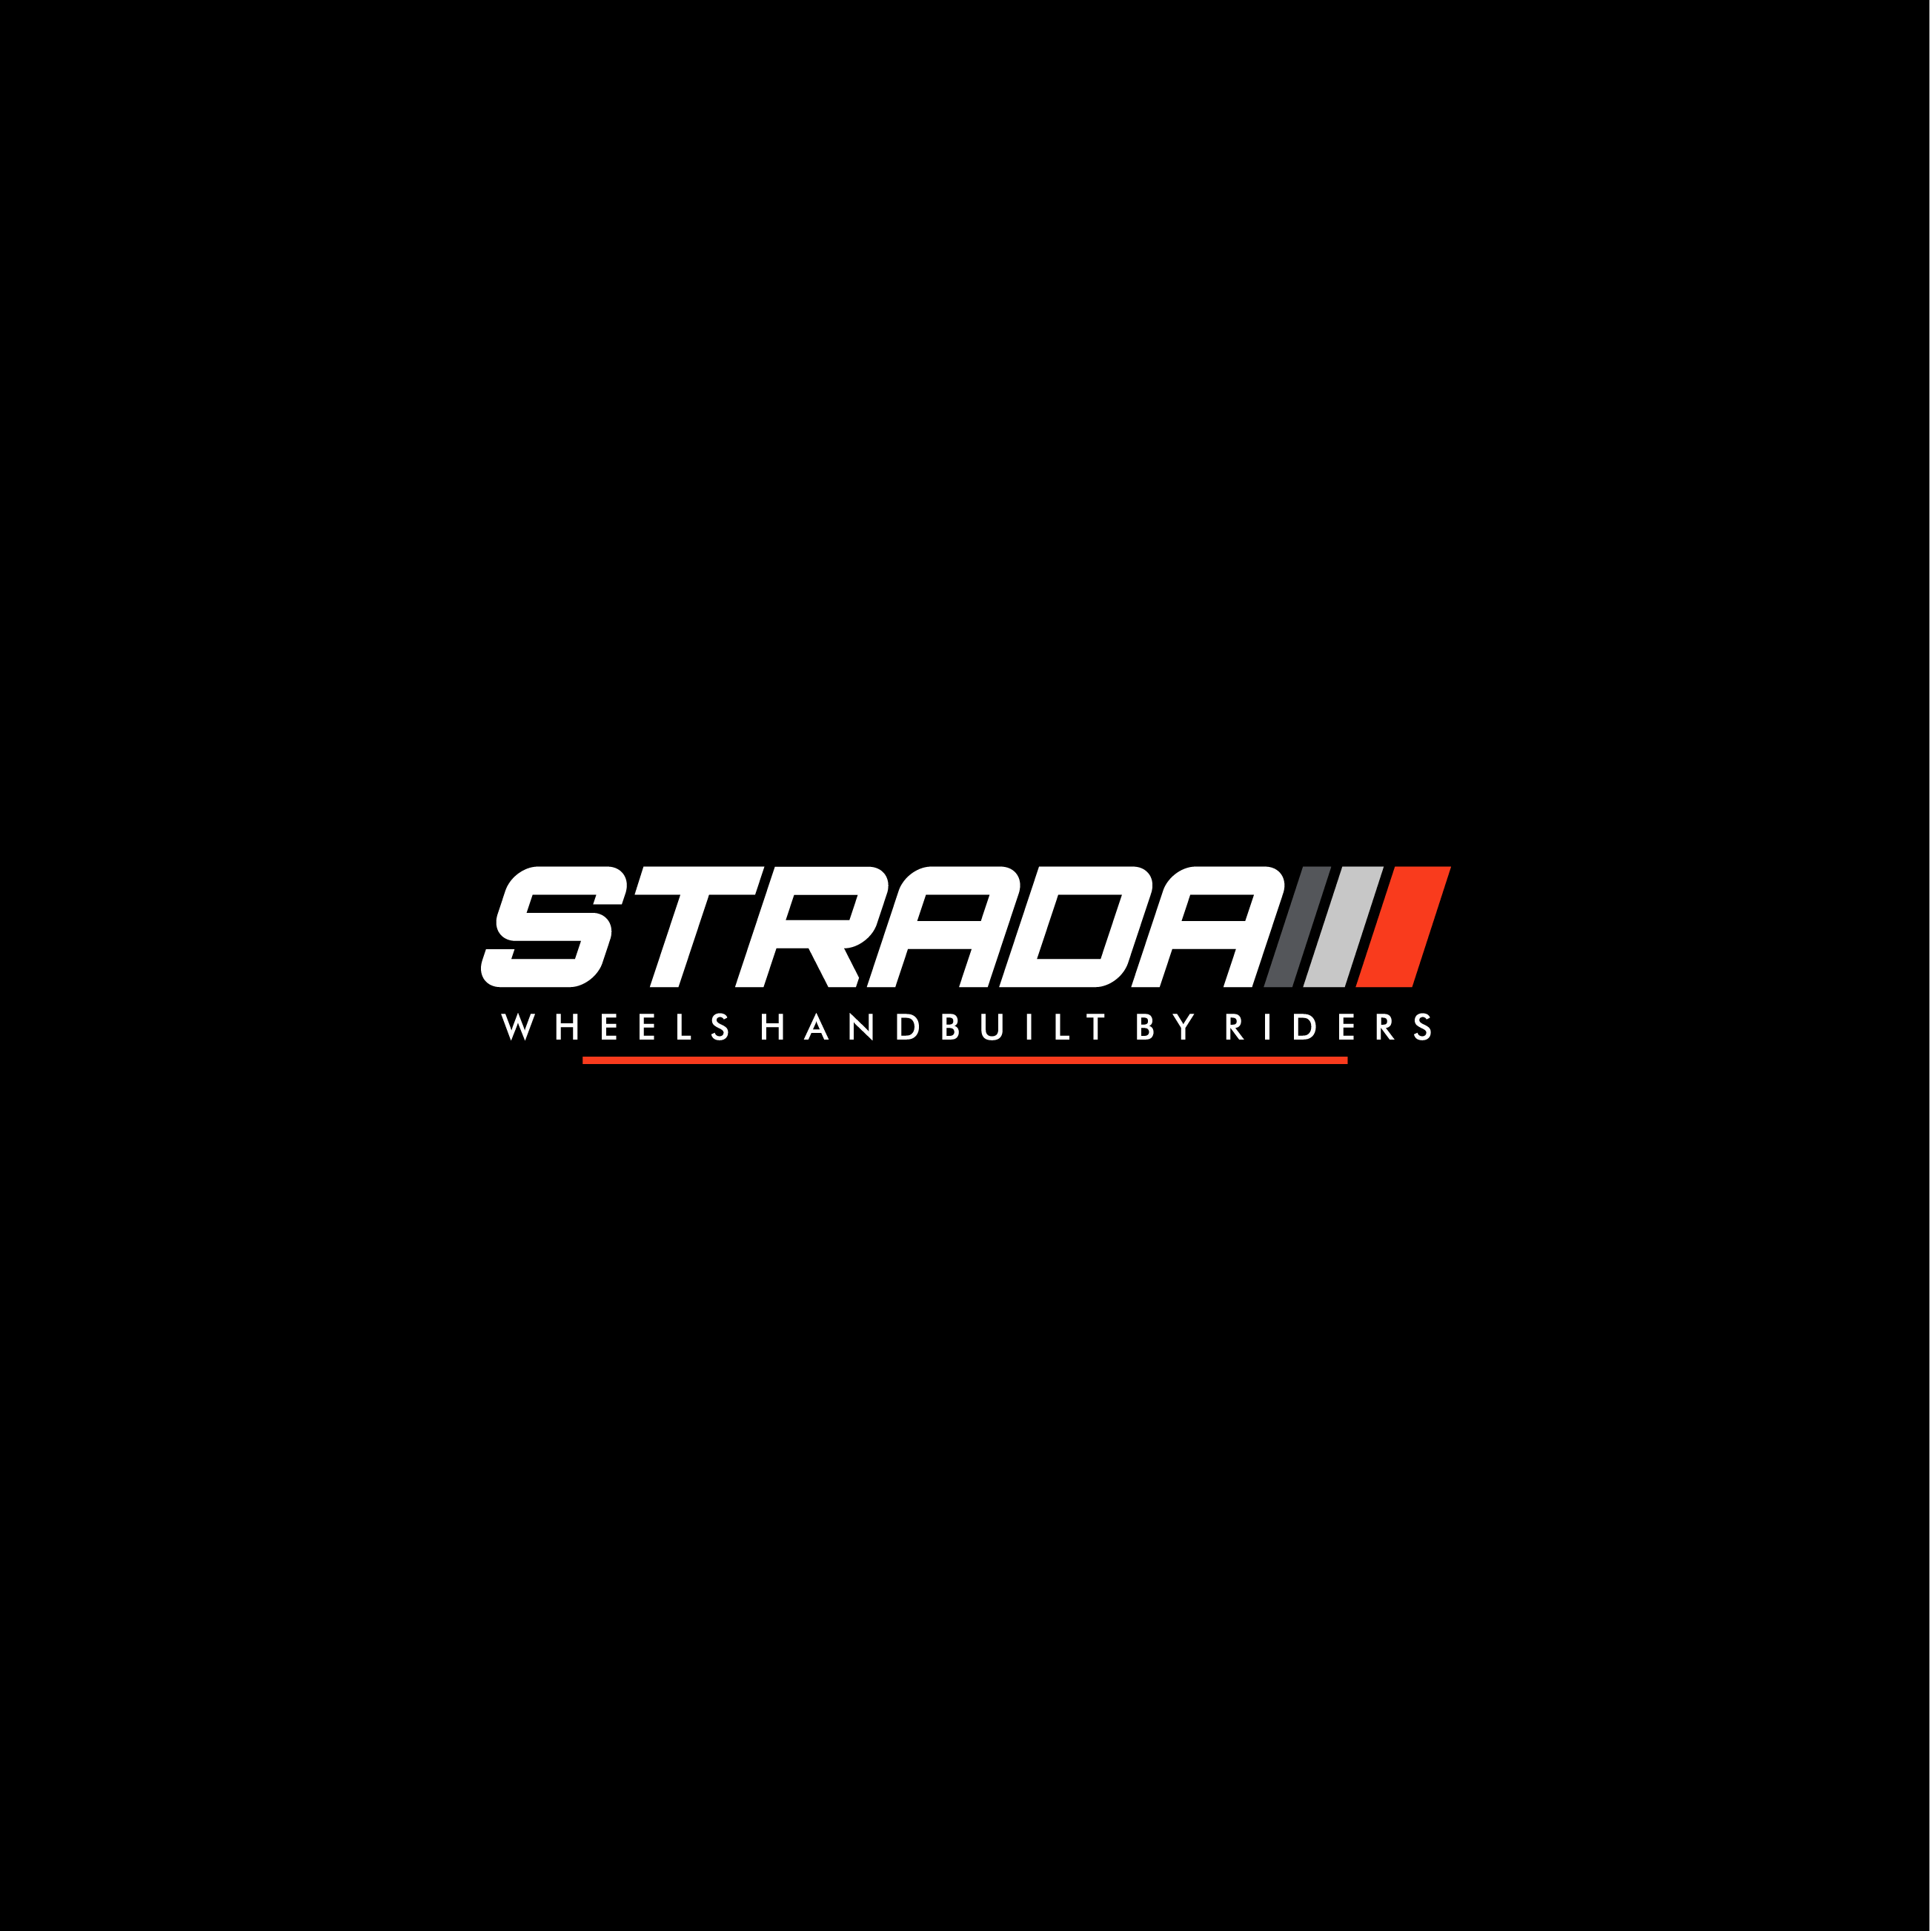 Club Image for STRADA